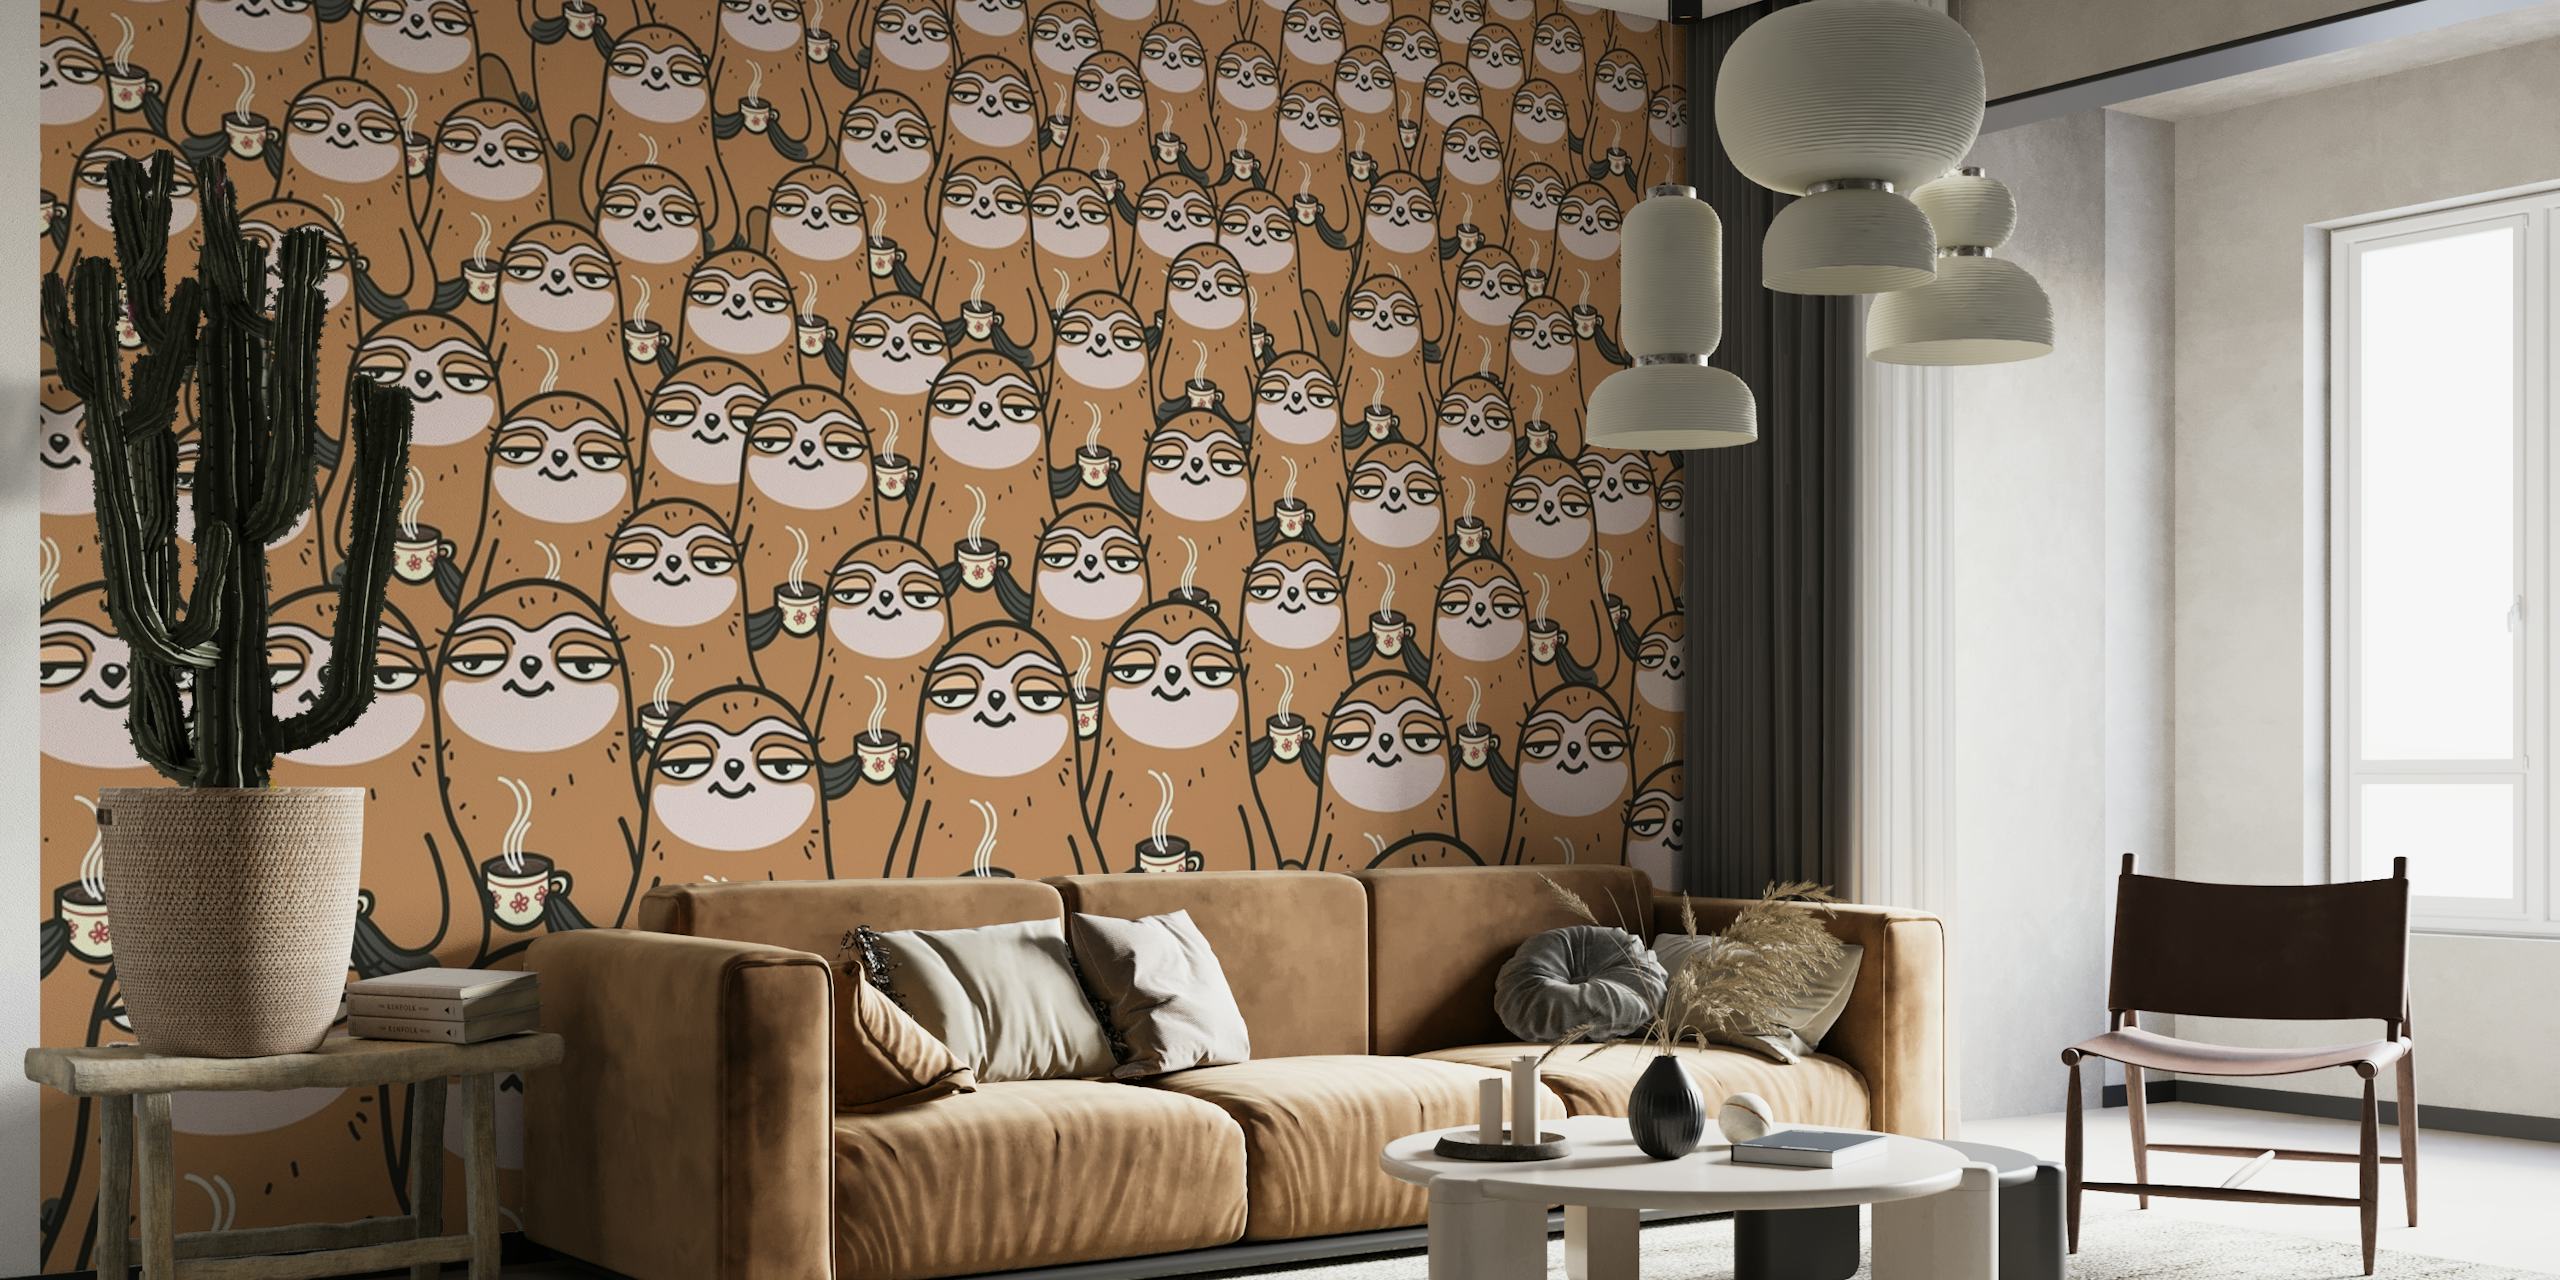 Sloth-tastic wallpaper